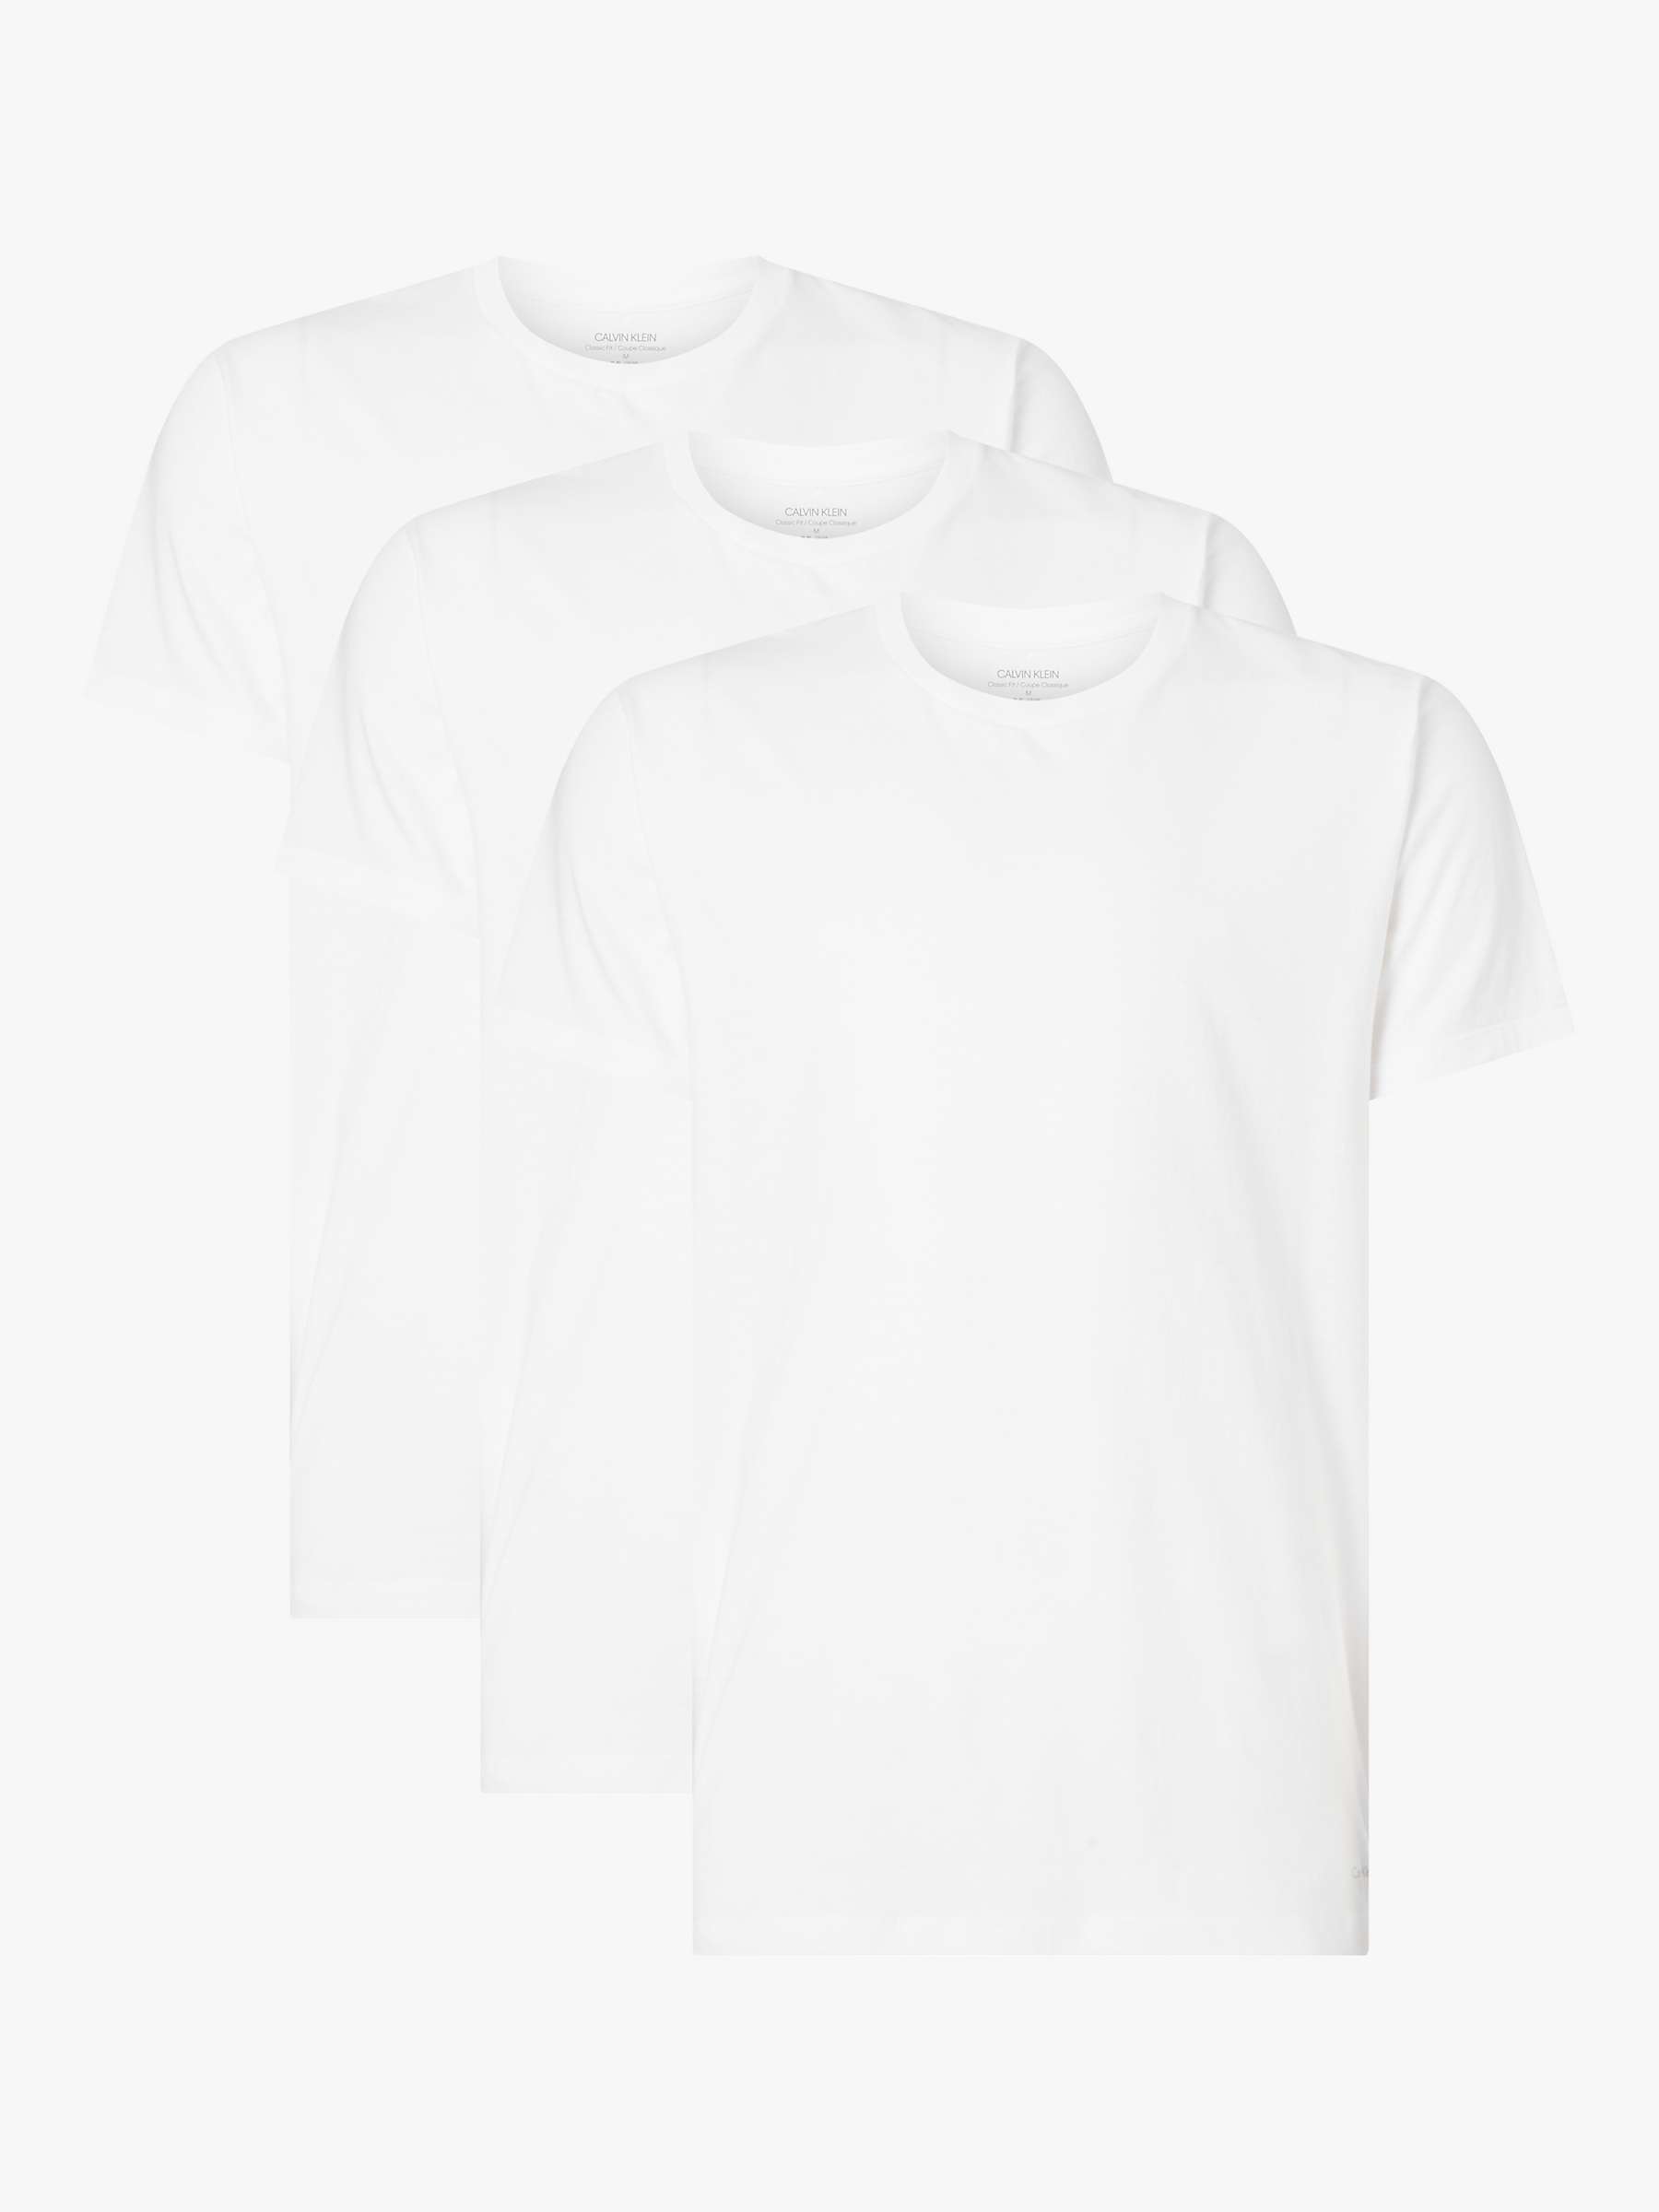 Buy Calvin Klein Pure Cotton Plain Lounge Top, Set of 3, White Online at johnlewis.com